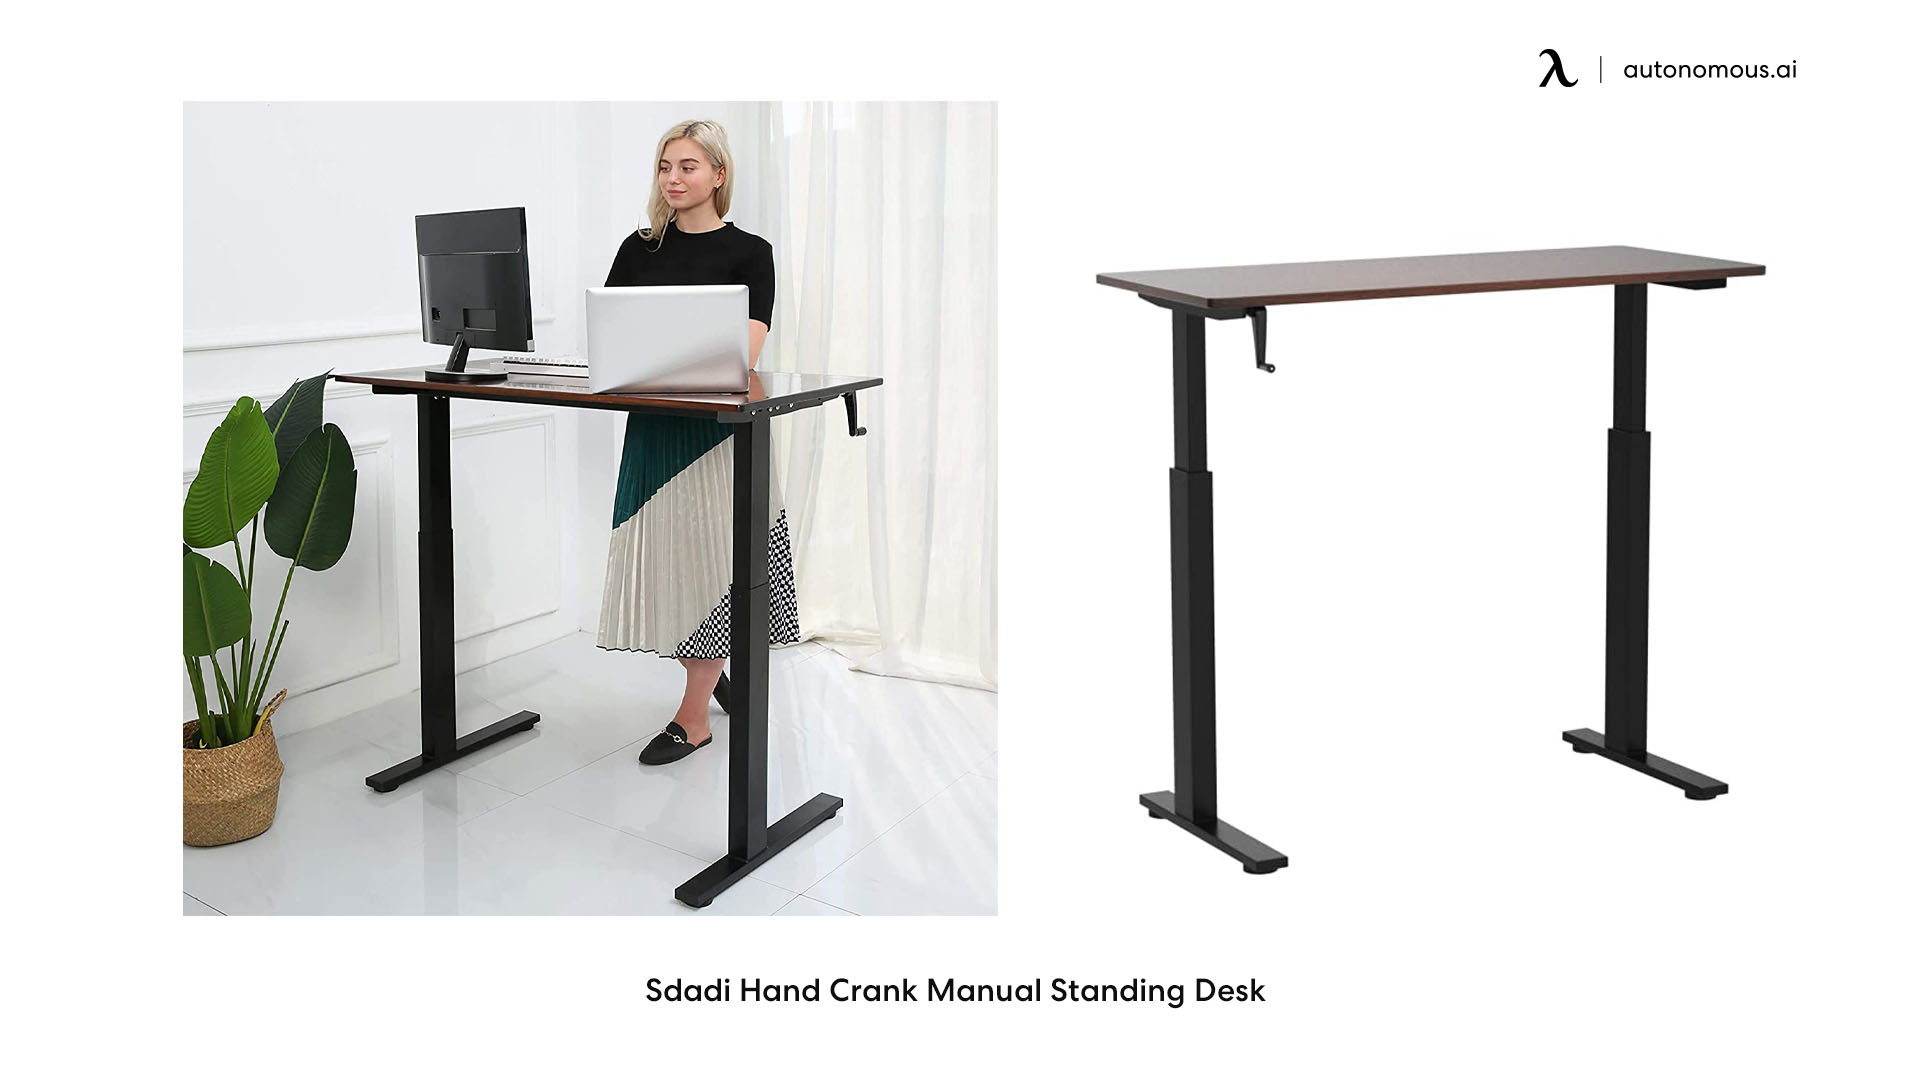 Sdadi Hand Crank Manual Standing Desk